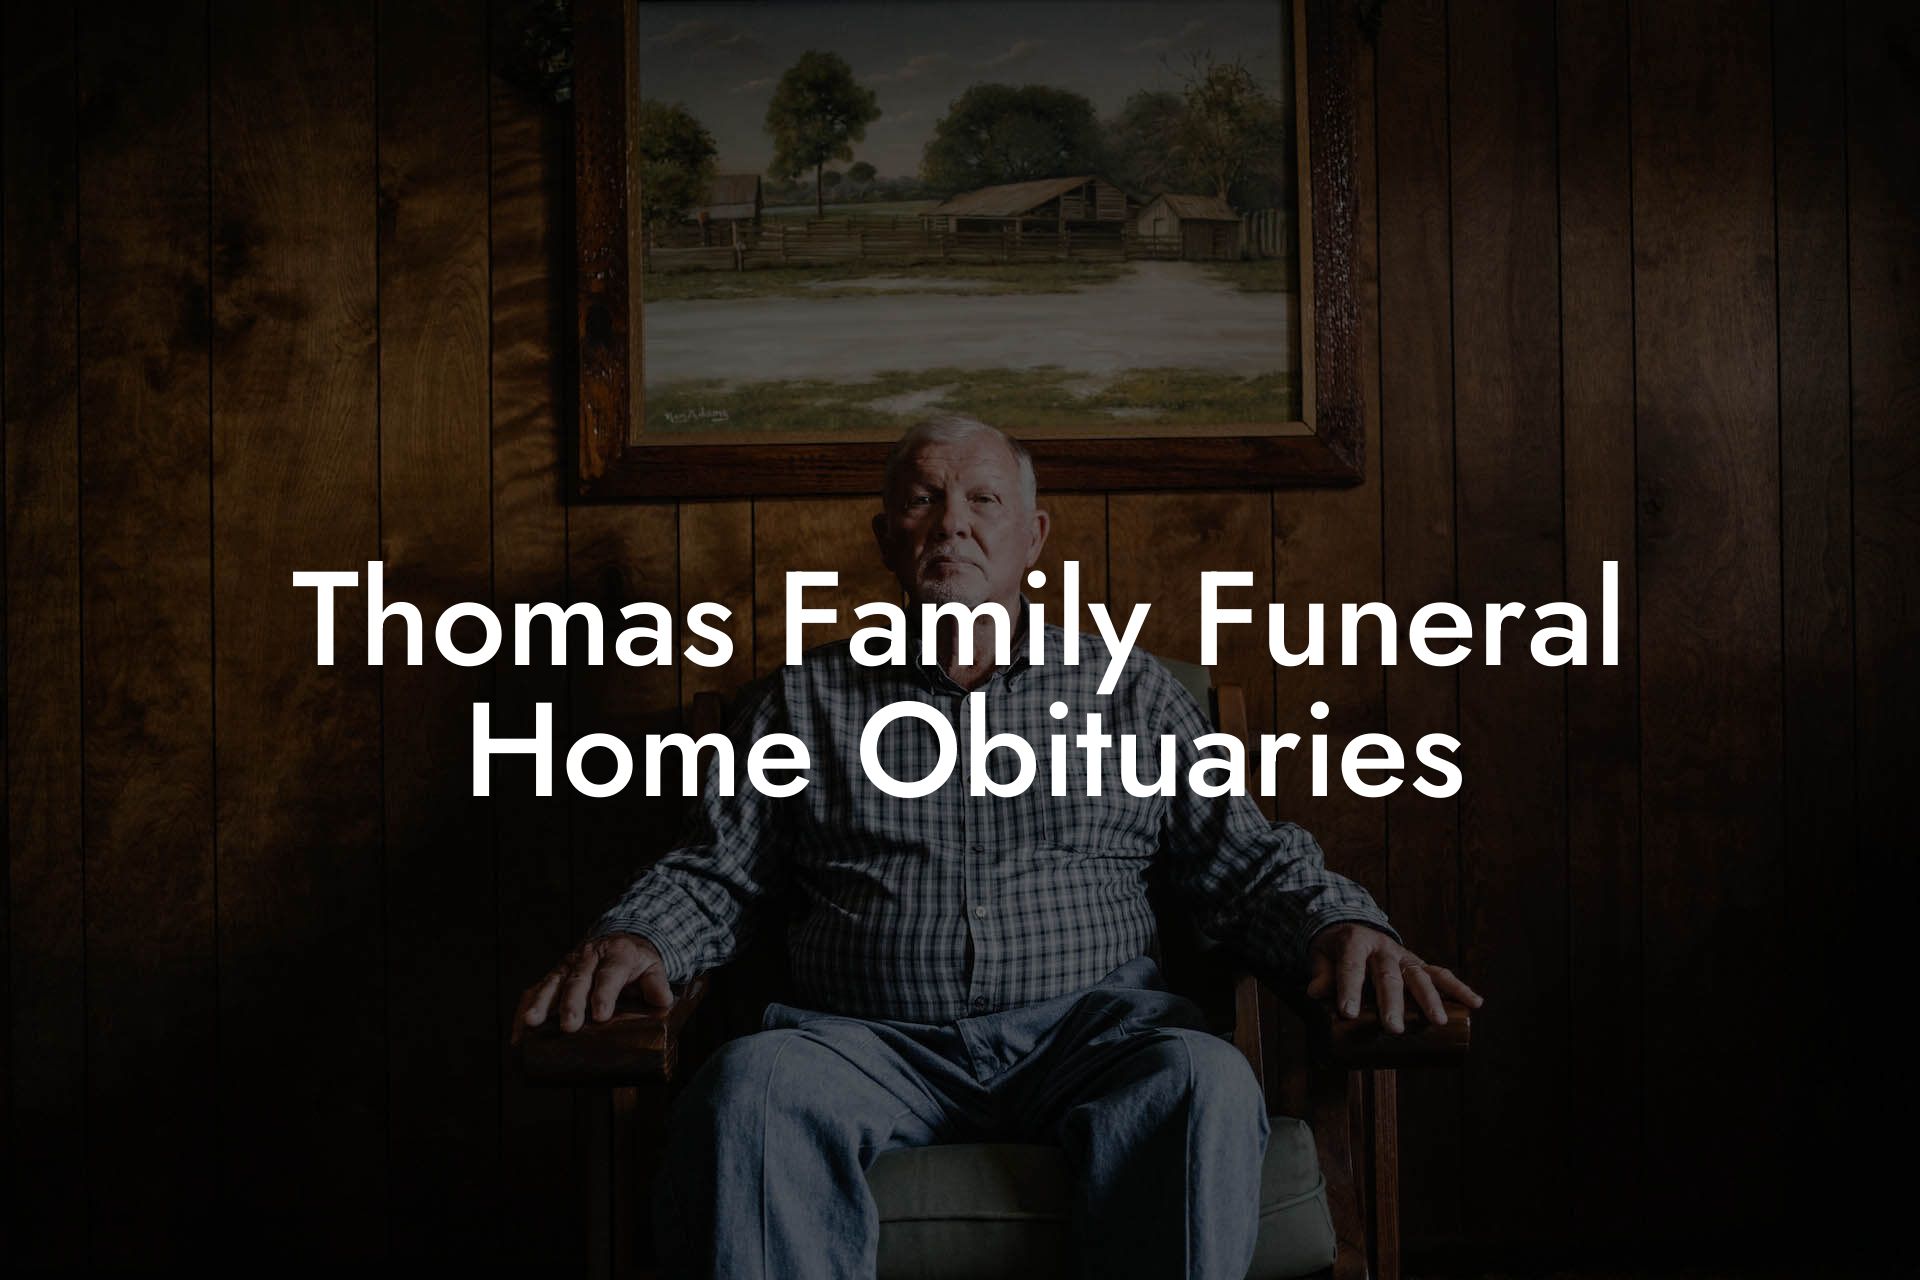 Thomas Family Funeral Home Obituaries